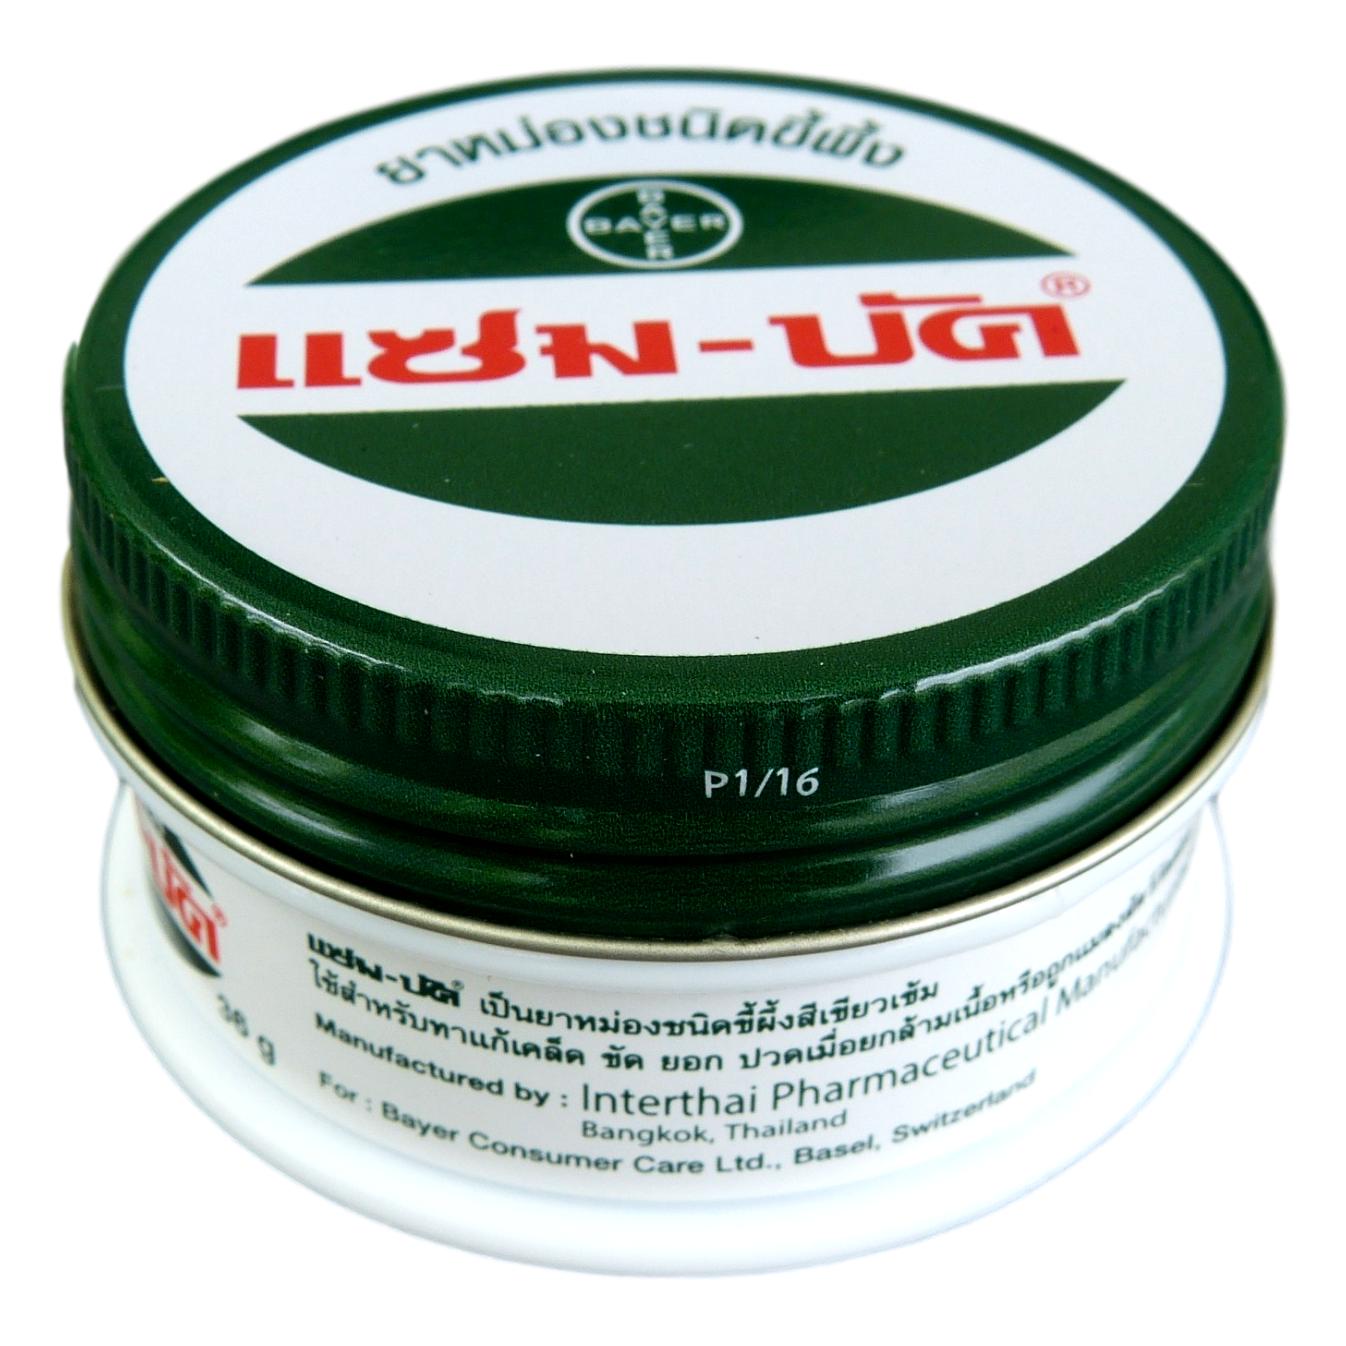 Zam Buk Medicated Herbal Ointment Balm 36 grams - Asian Beauty Supply